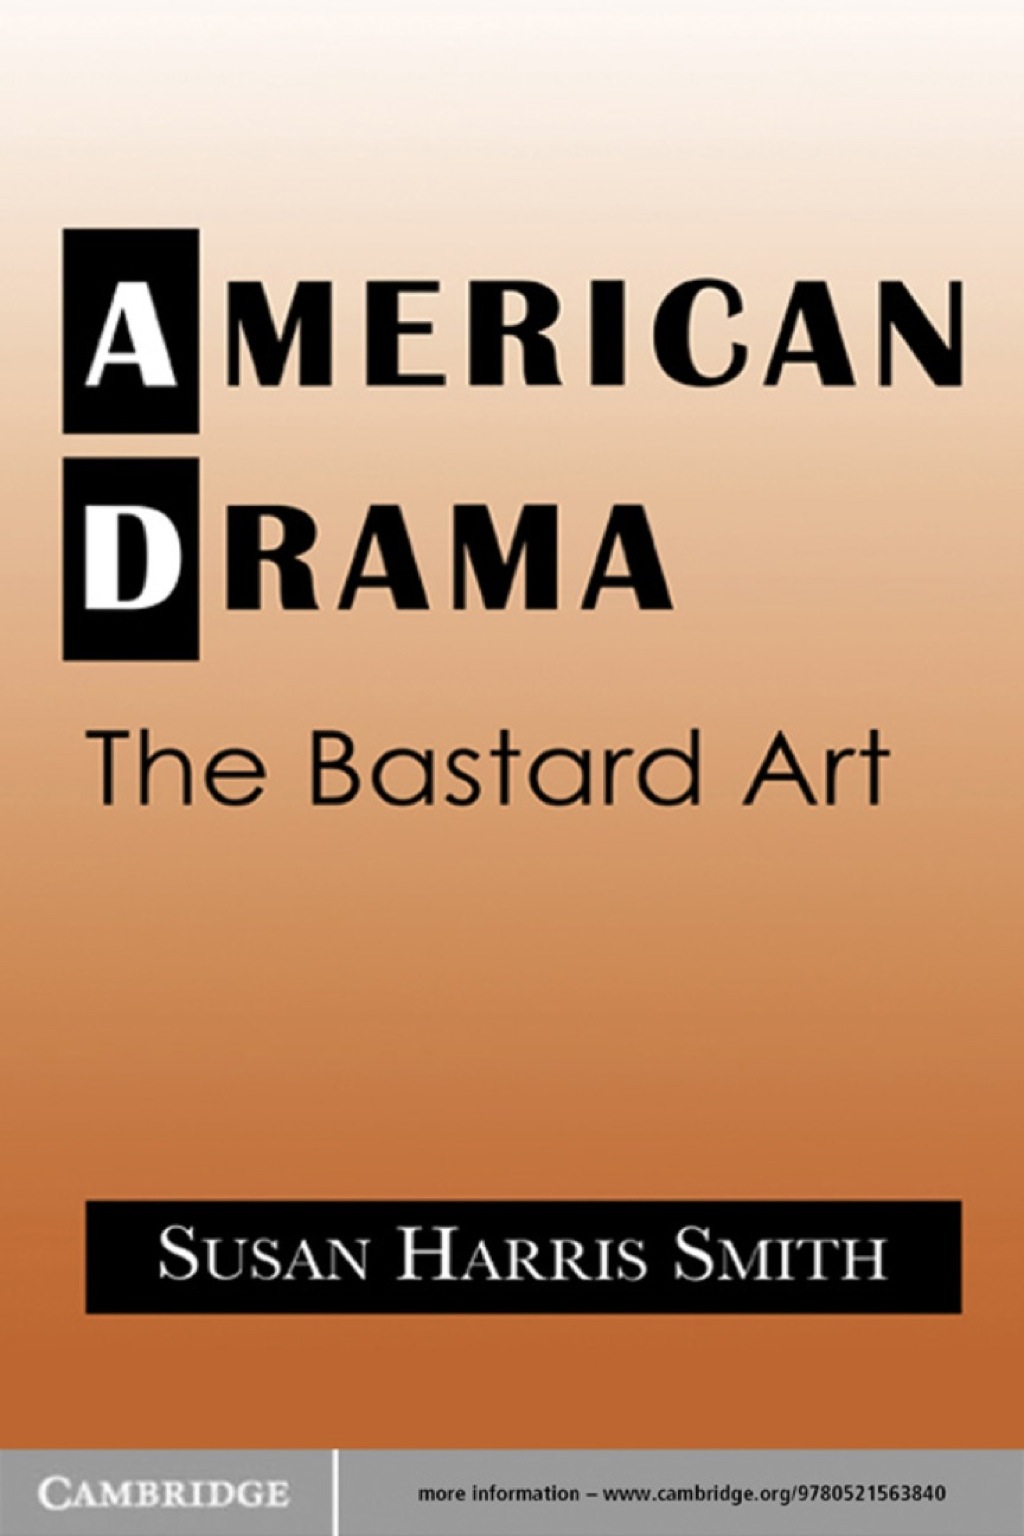 American Drama (eBook) - Susan Harris Smith